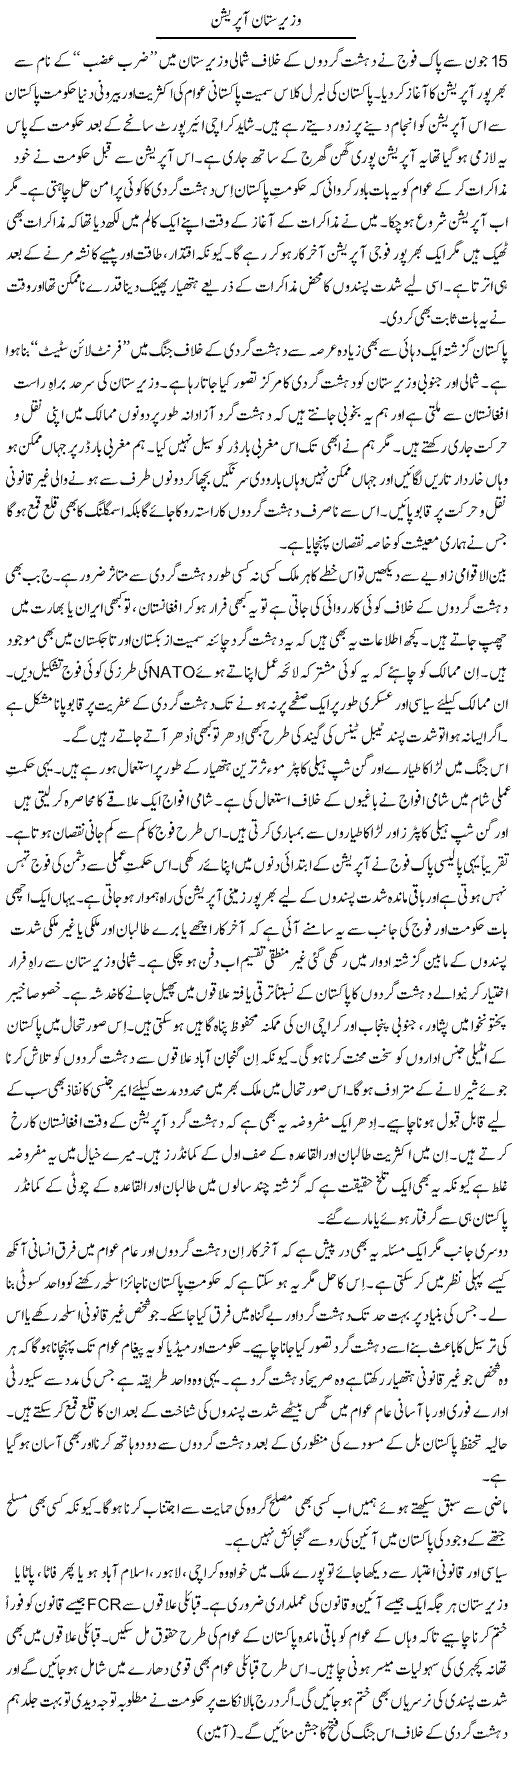 Waziristan Operation | Syed Zeeshan Haider | Daily Urdu Columns